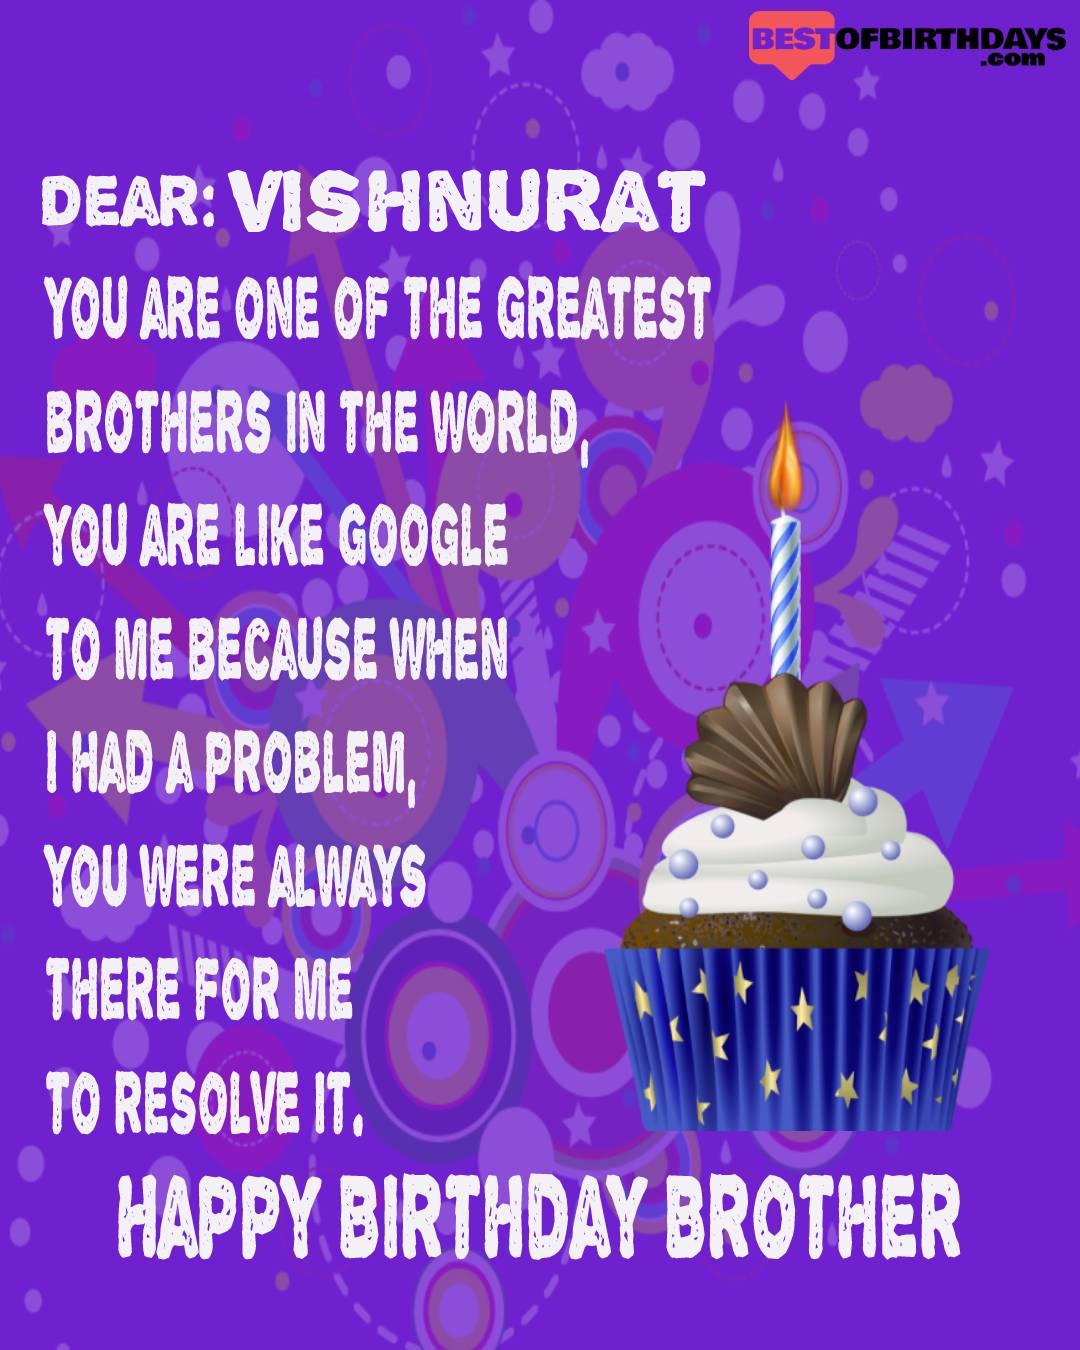 Happy birthday vishnurat bhai brother bro